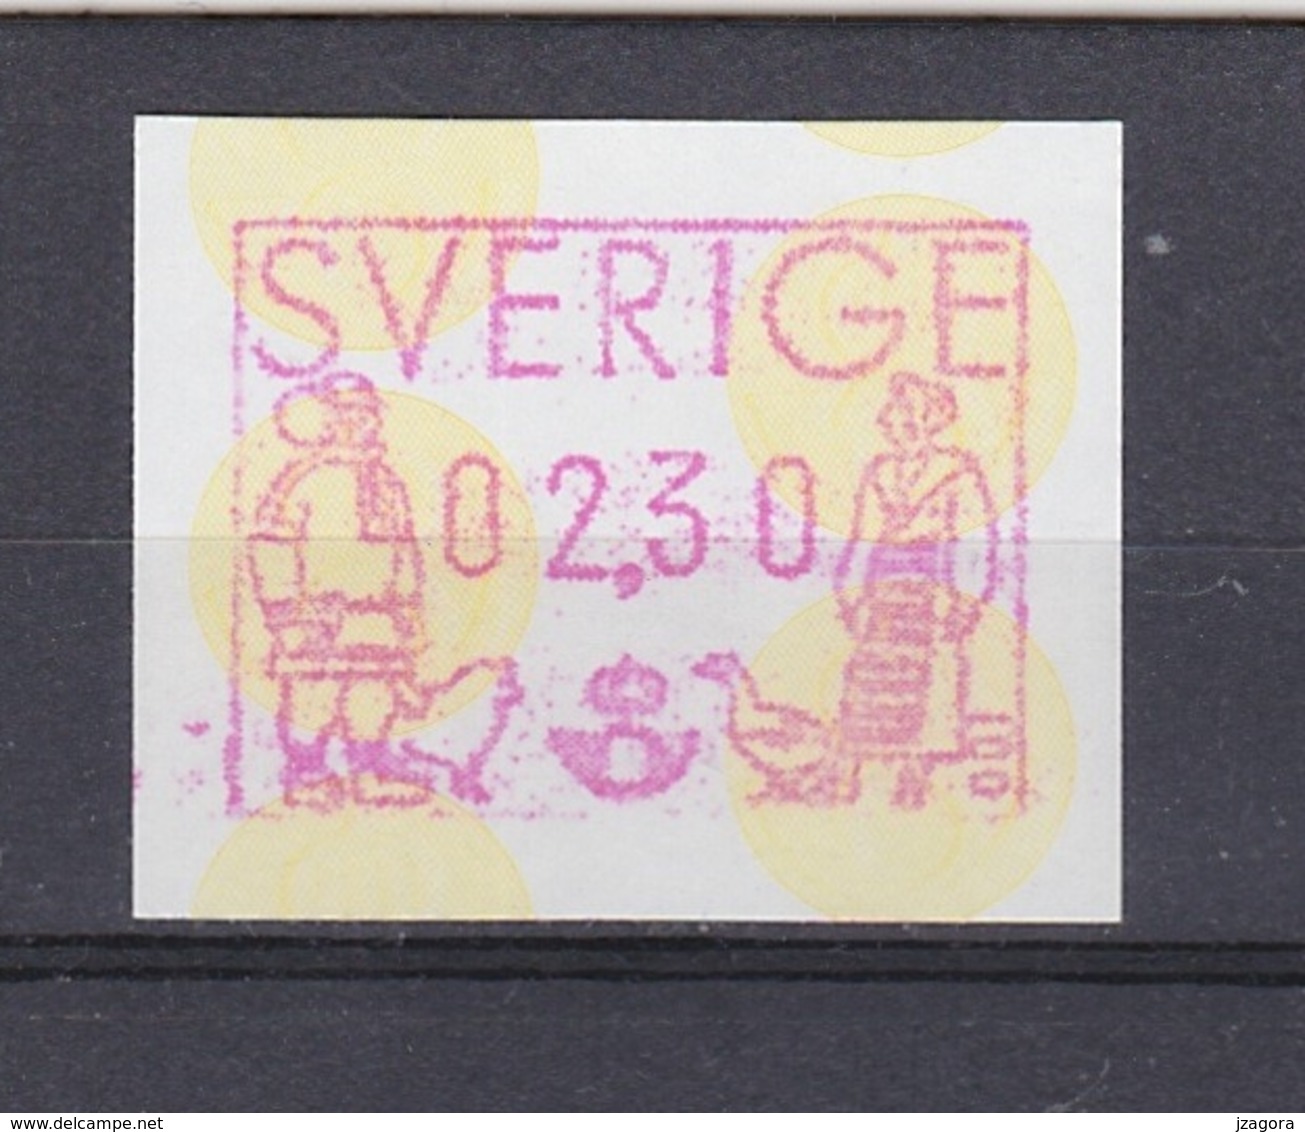 SWEDEN SUEDE SCHWEDEN 1991 PRAGMA FRAMA AUTOMATIC STAMPS AUTOMATPORTO AUTOMATENMARKEN AUTOMAT MÄRKE 2,30 Kr MNH ATM - Automatenmarken [ATM]